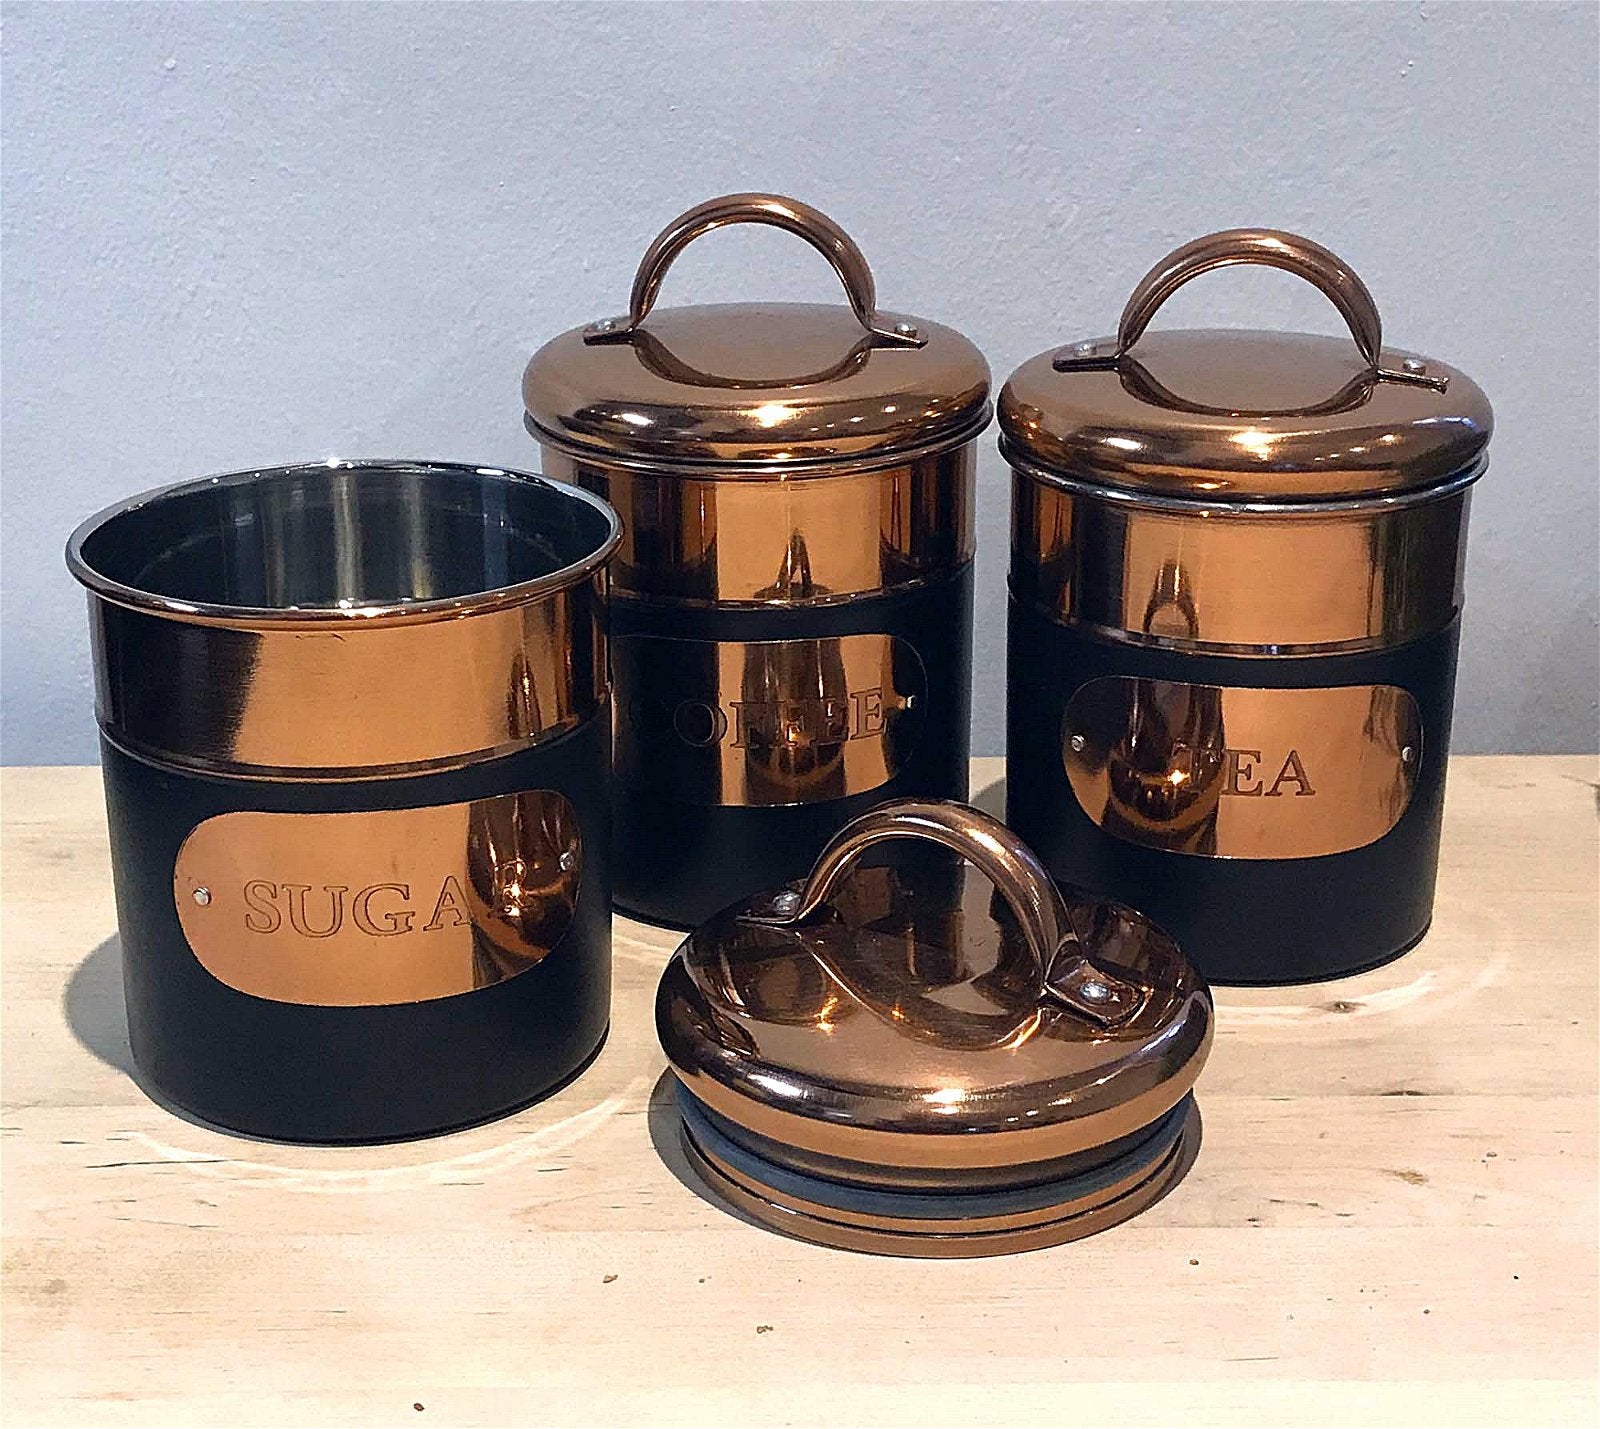 Set of 3 Black & Copper Tea, Sugar & Coffee Tins - Kaftan direct